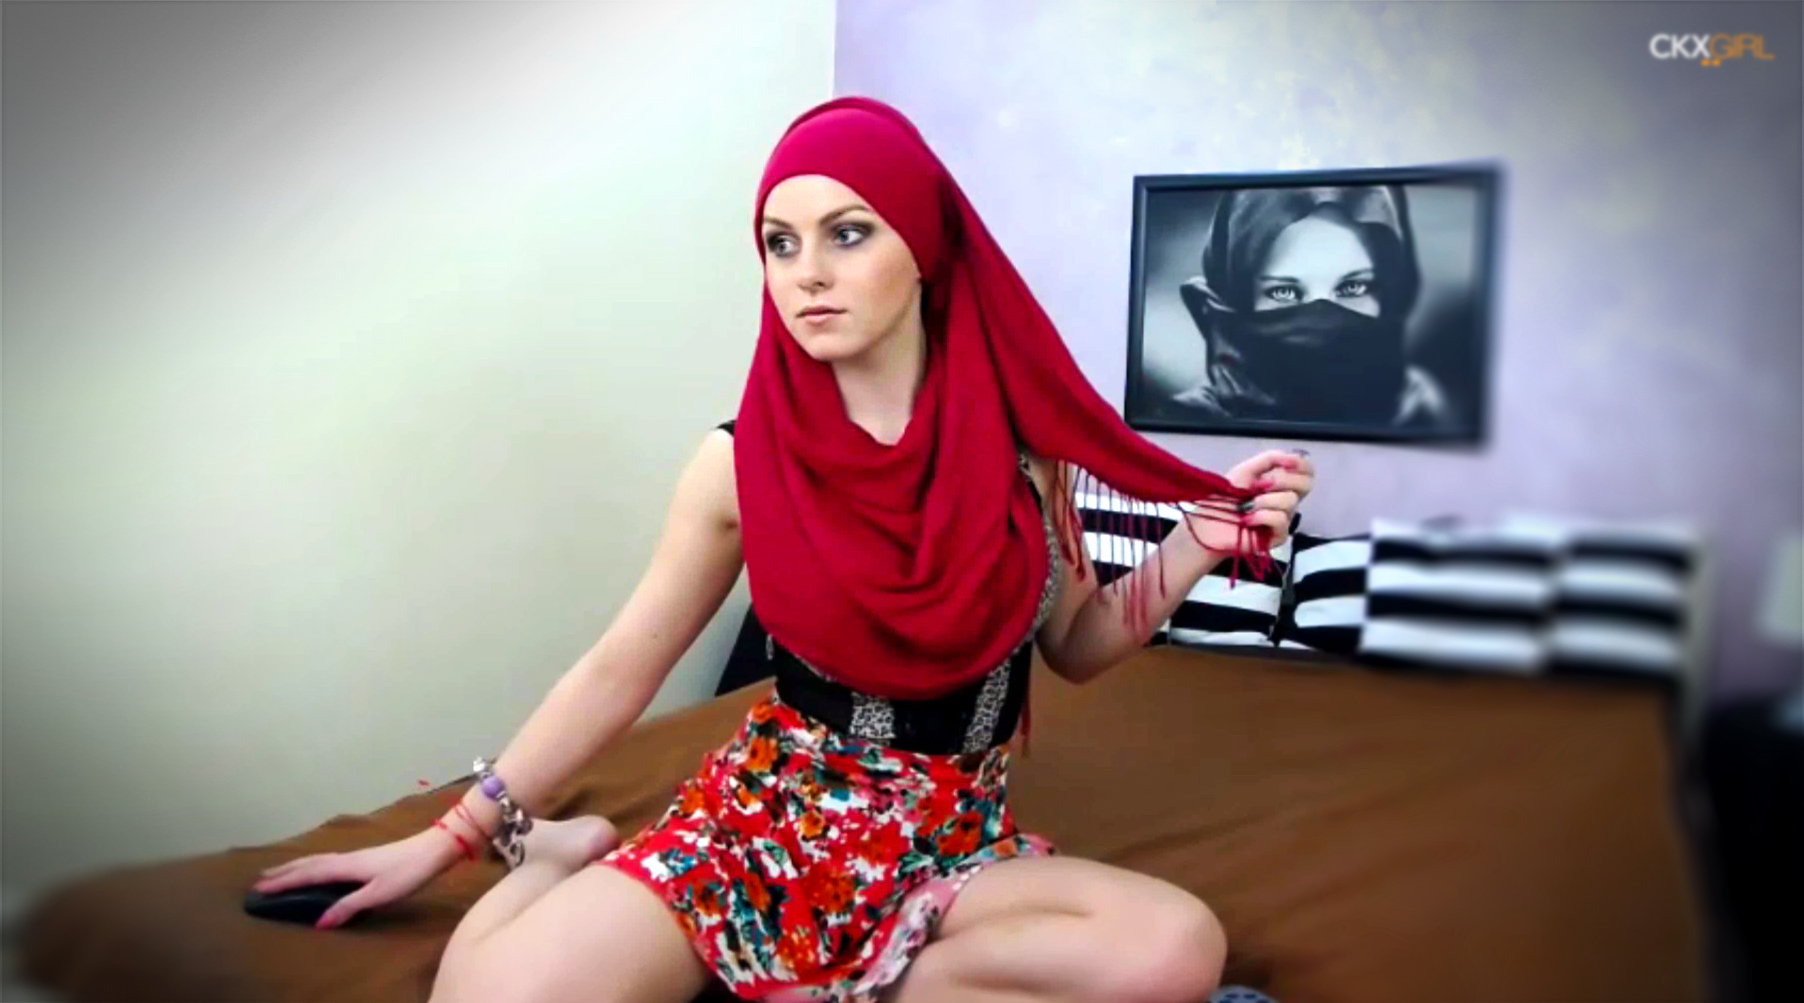 Muslimkyrah Cokegirlx Muslim Hijab Girls Live Sex Shows Xxx